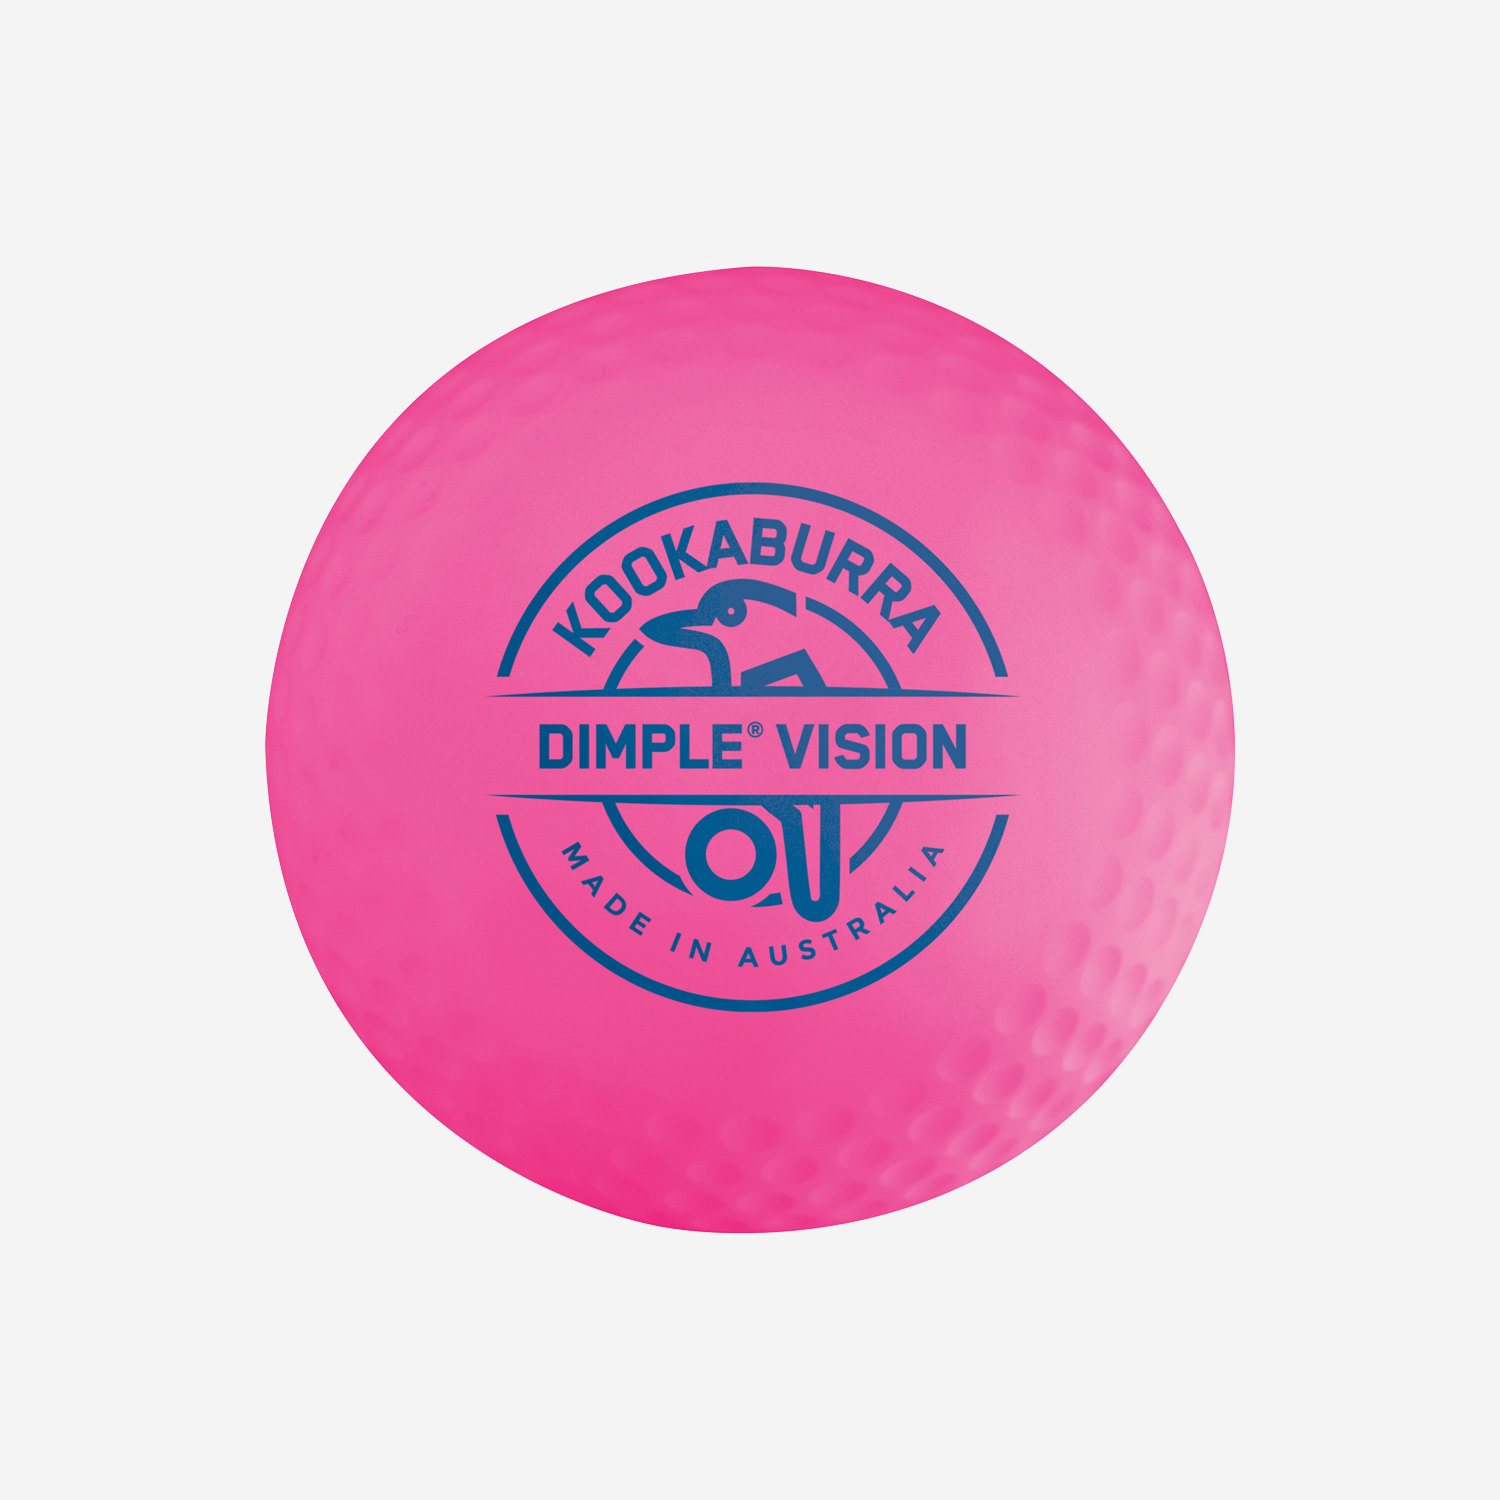 Kookaburra Dimple Vision Pink Hockey Ball